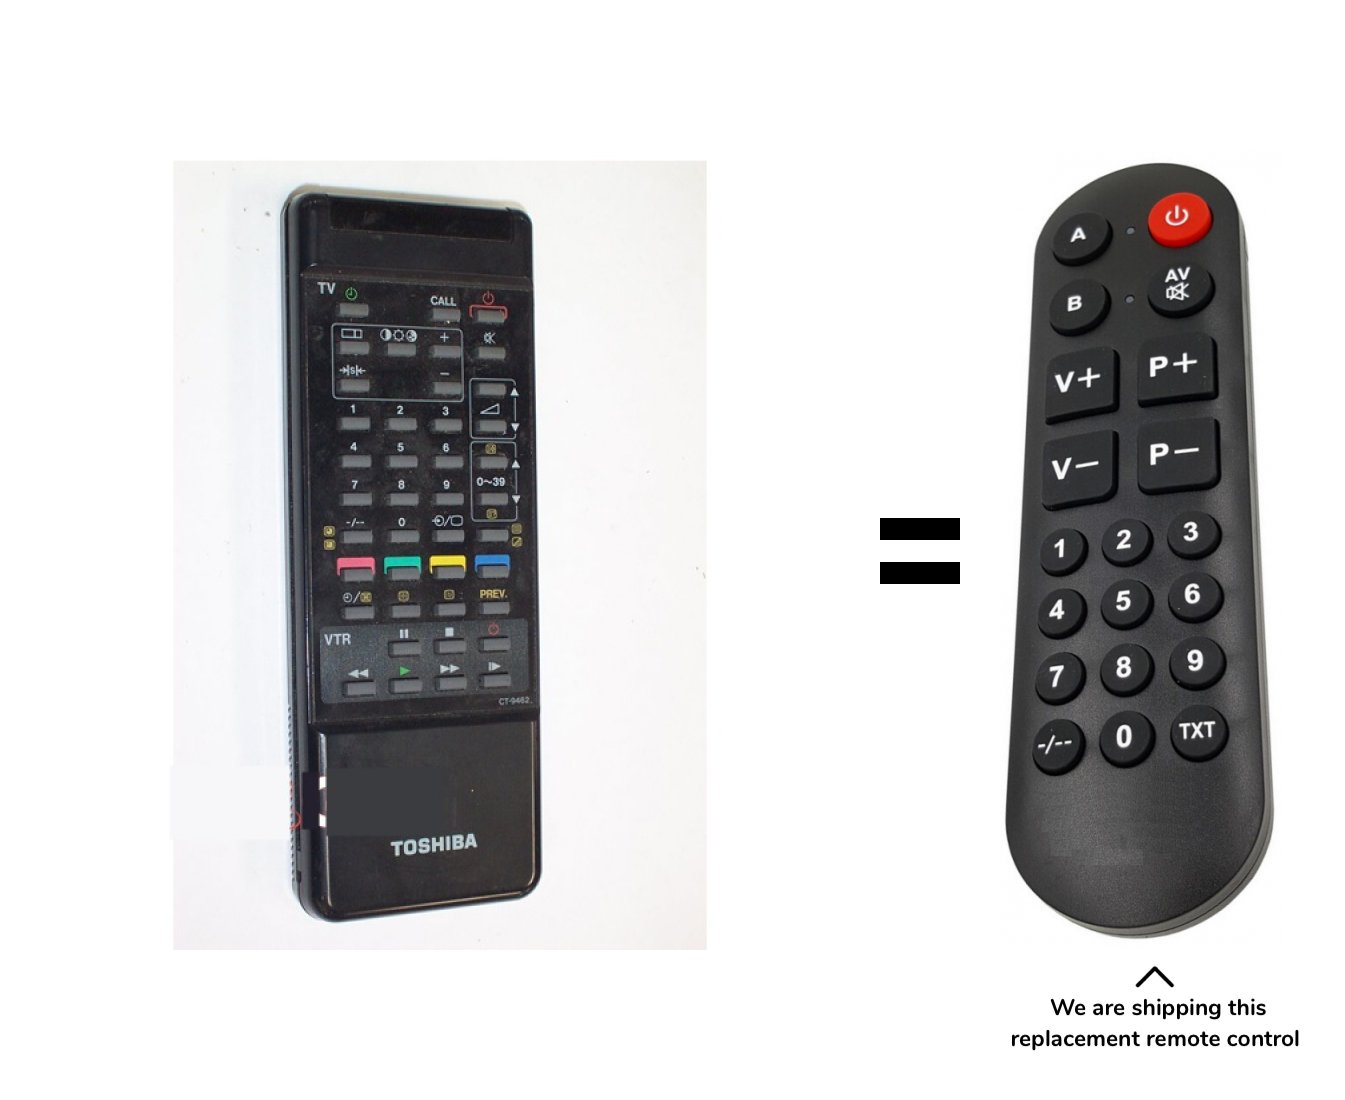 Toshiba CT-9450 remote control for seniors